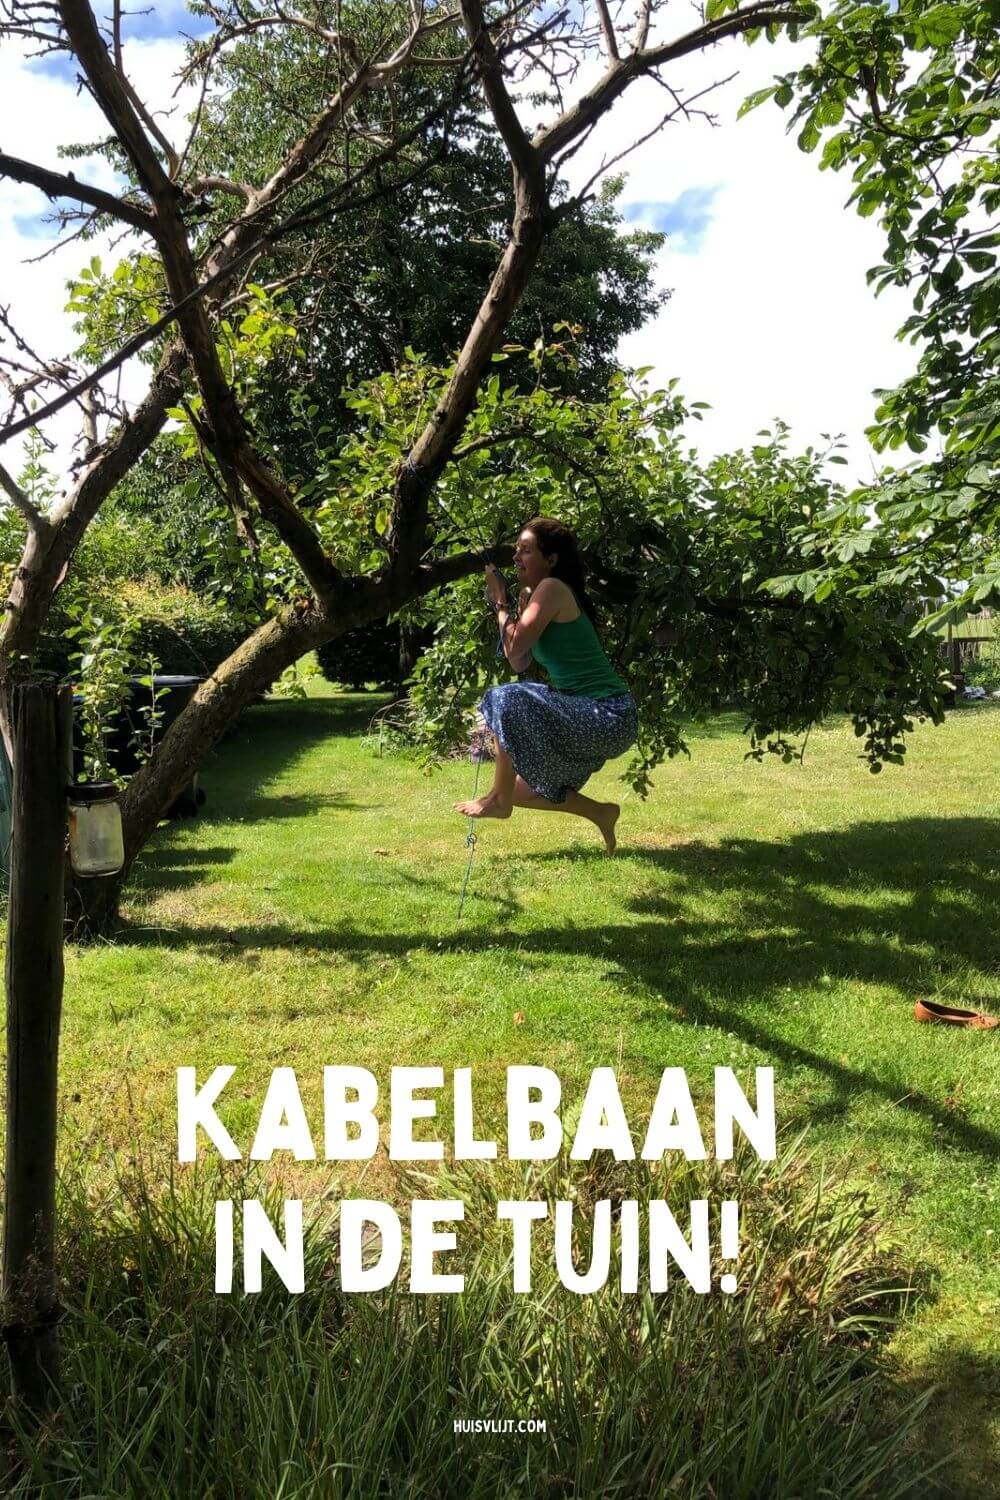 Kabelbaan tuin: Me Tarzan, you Jane!